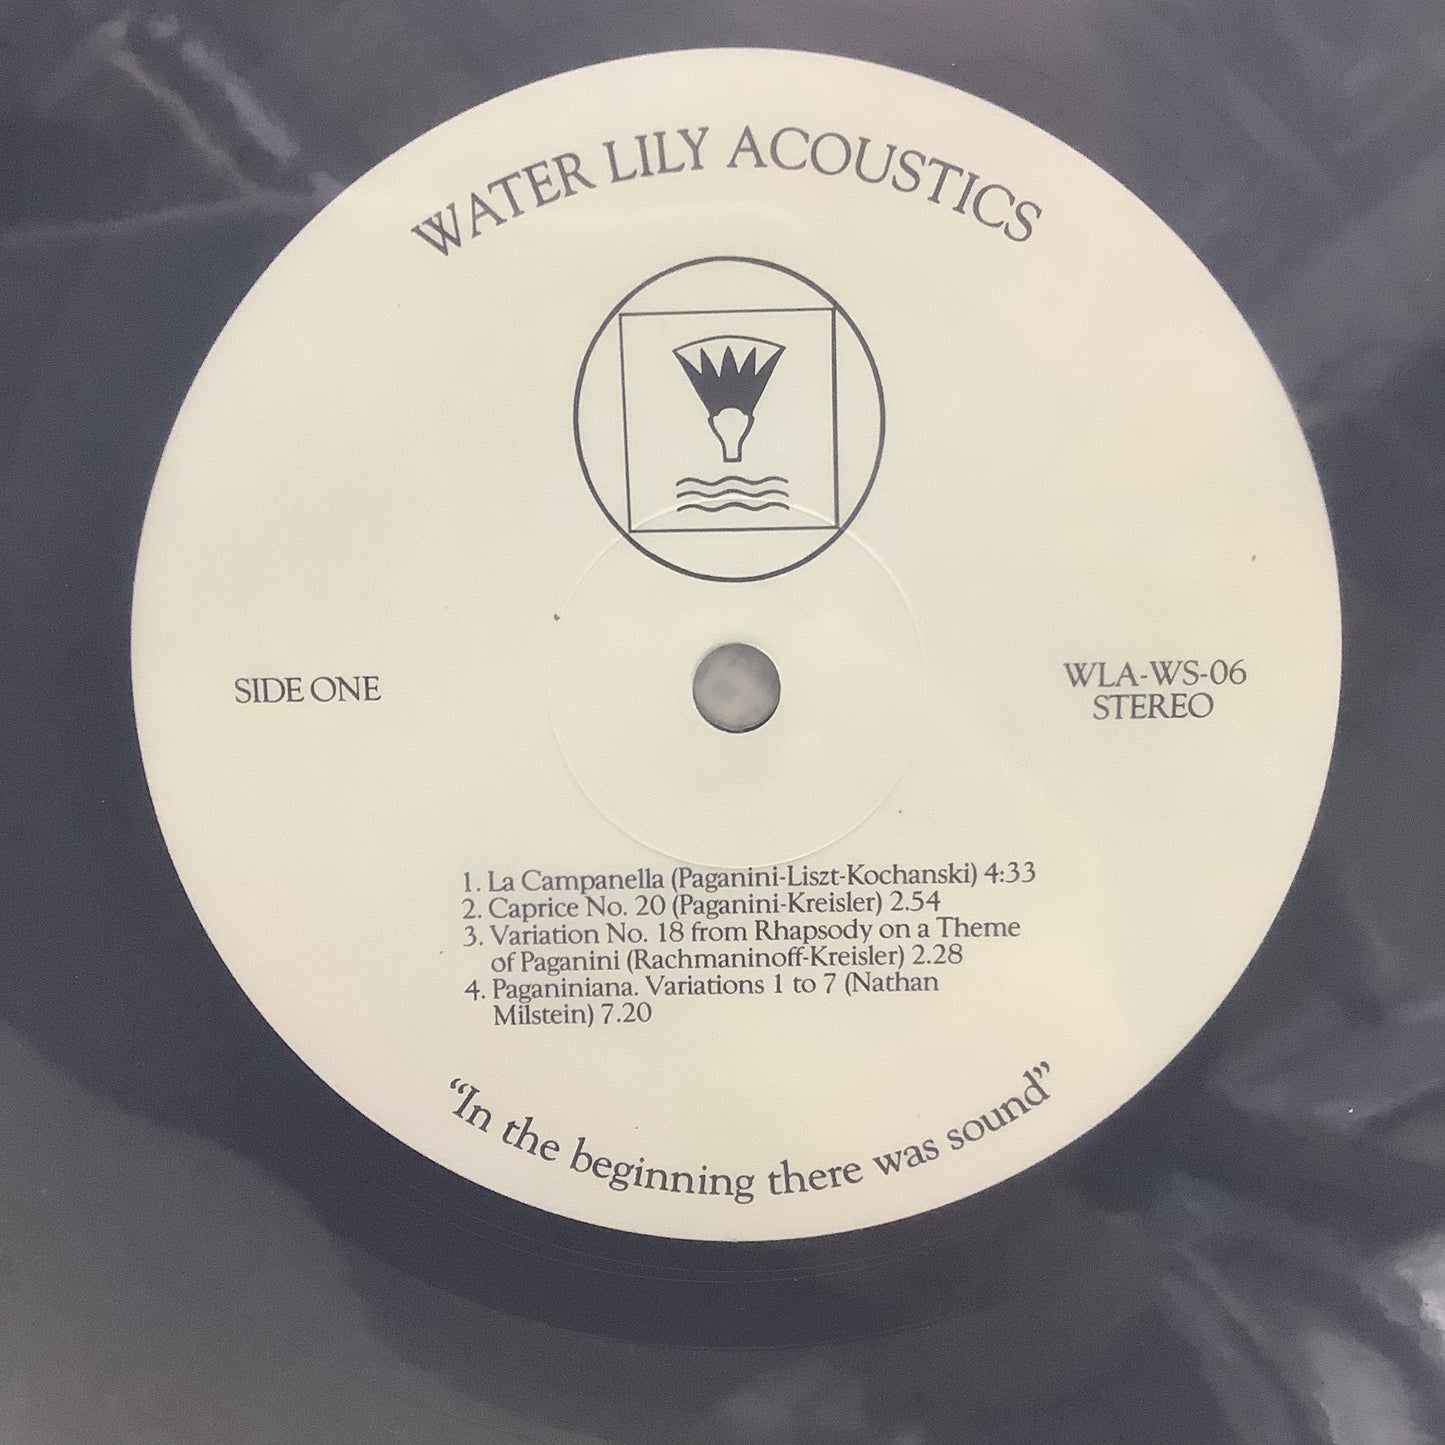 Ruggiero Ricci - Paganiniana: The Genoan's Legacy - Water Lily Acoustics LP